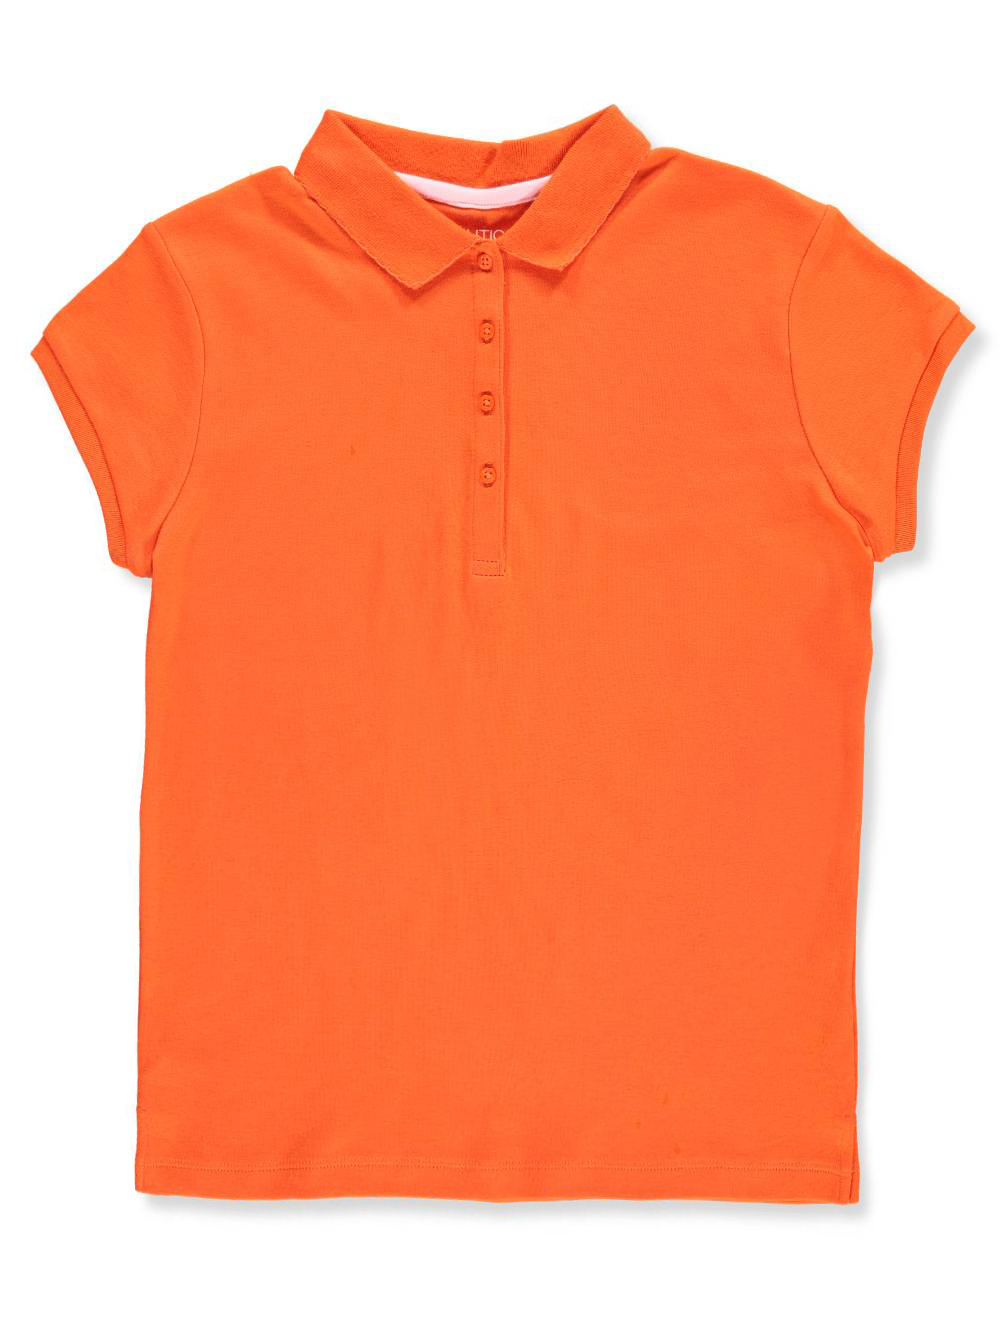 Girls Orange Polo Tops